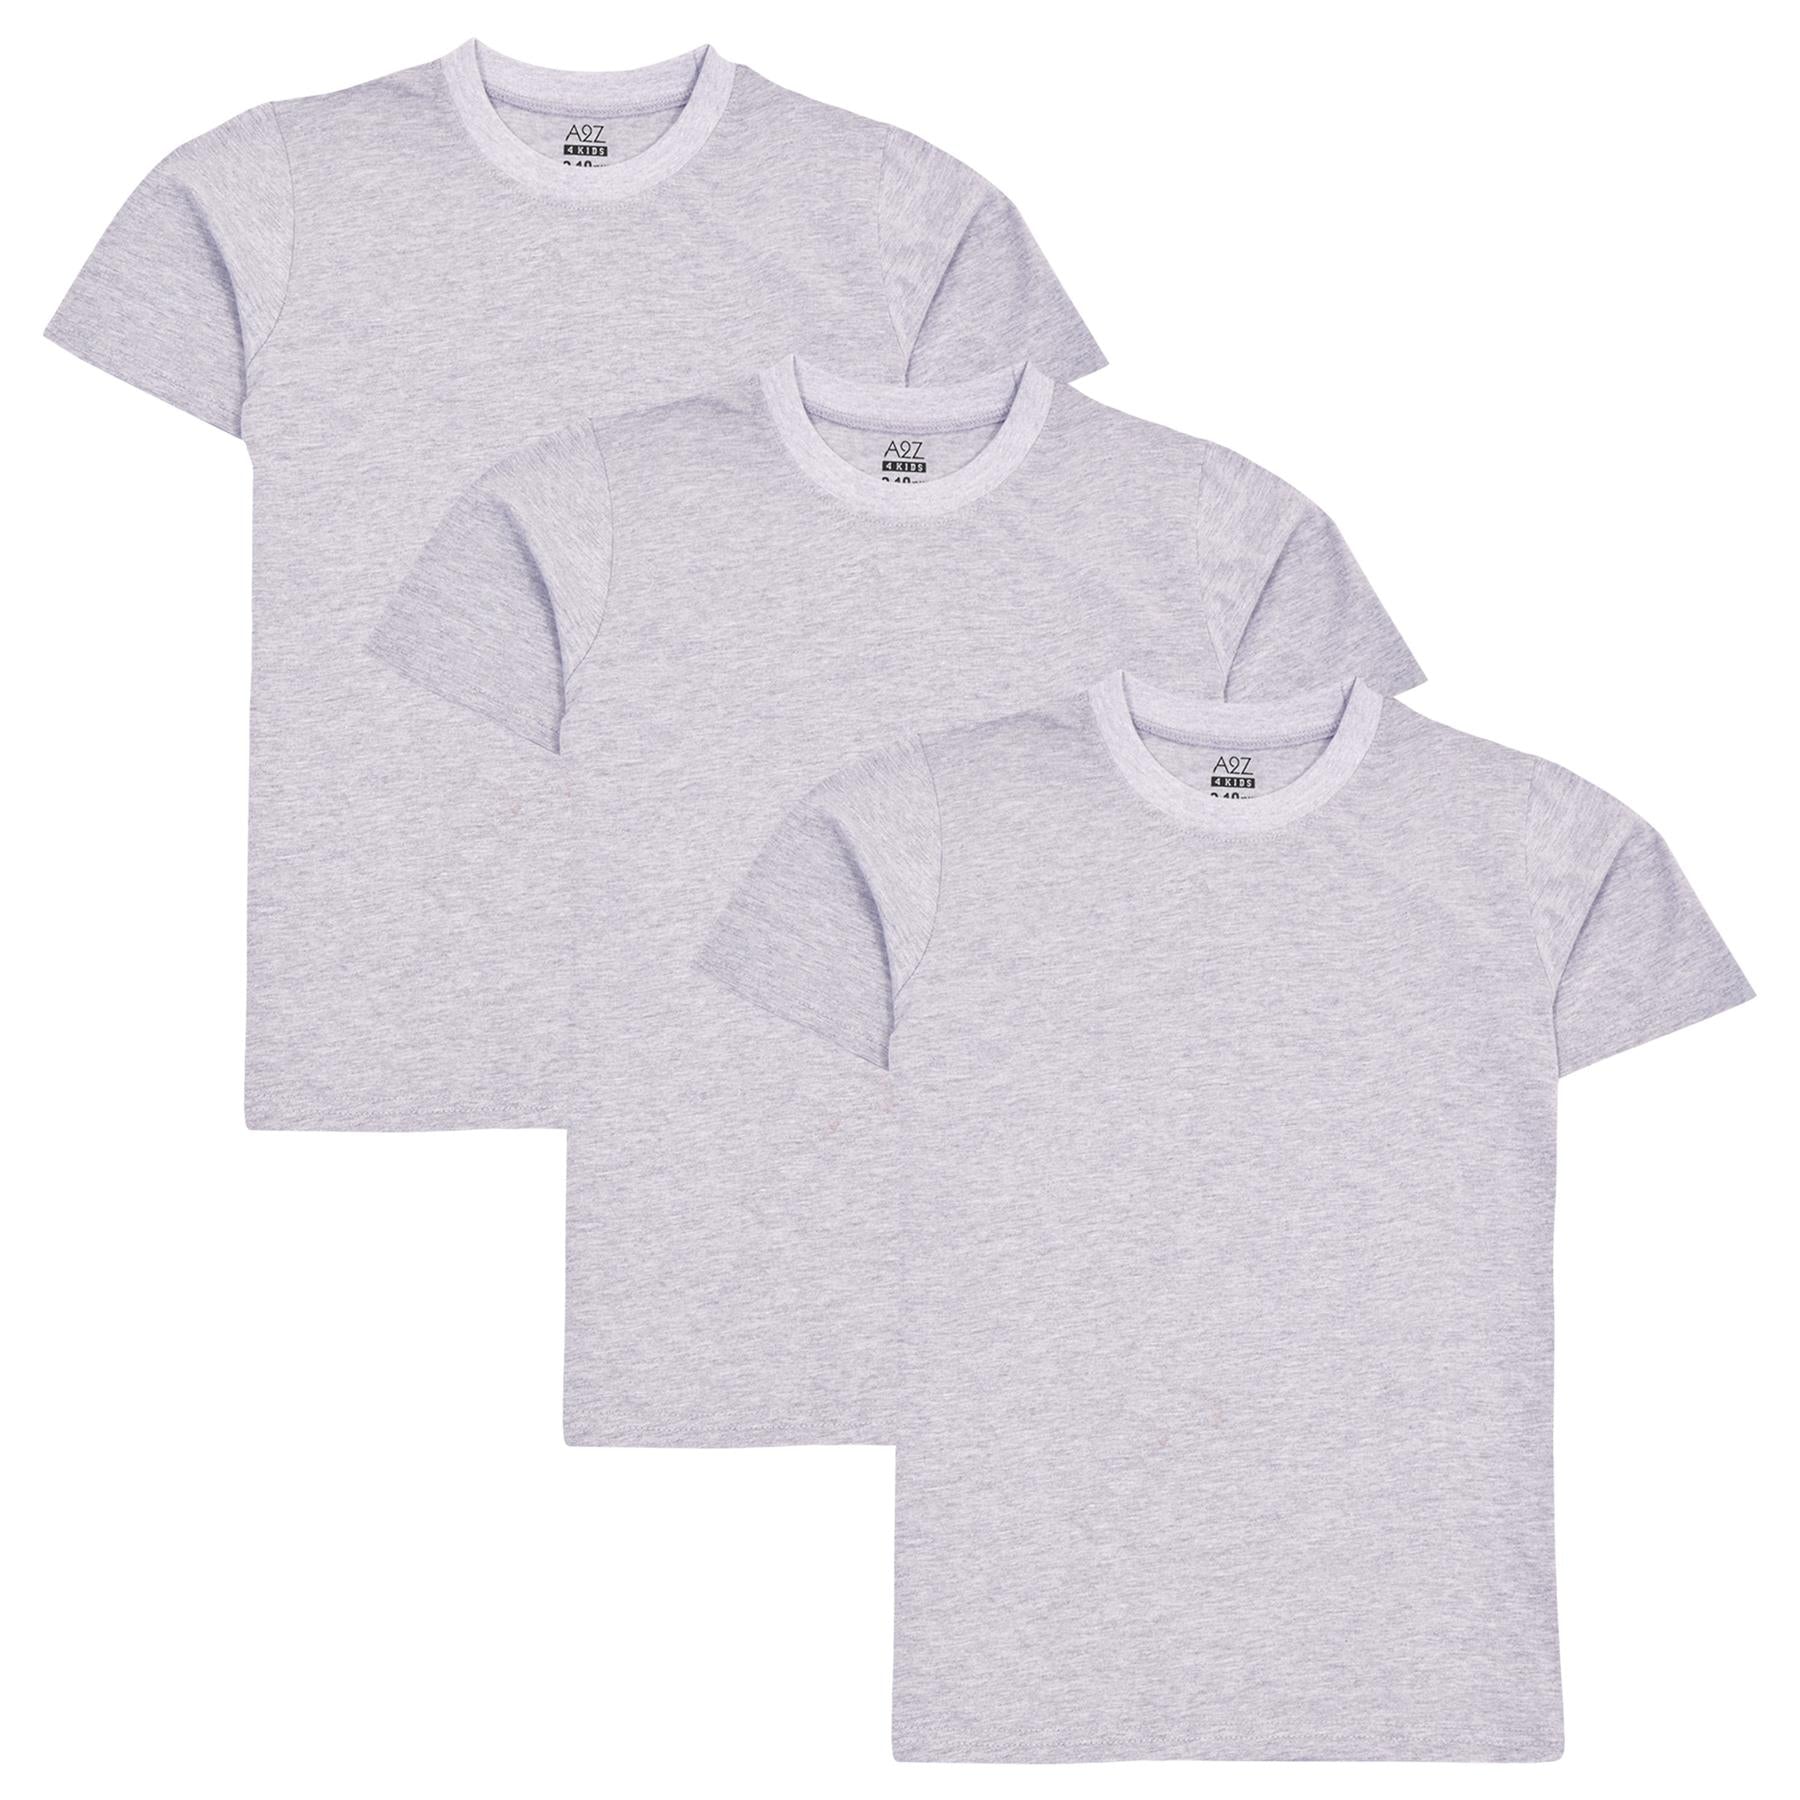 Kids Boys Girls Pack Of 3 T Shirts Plain Summer Fashion Soft Feel Tank Top Tees